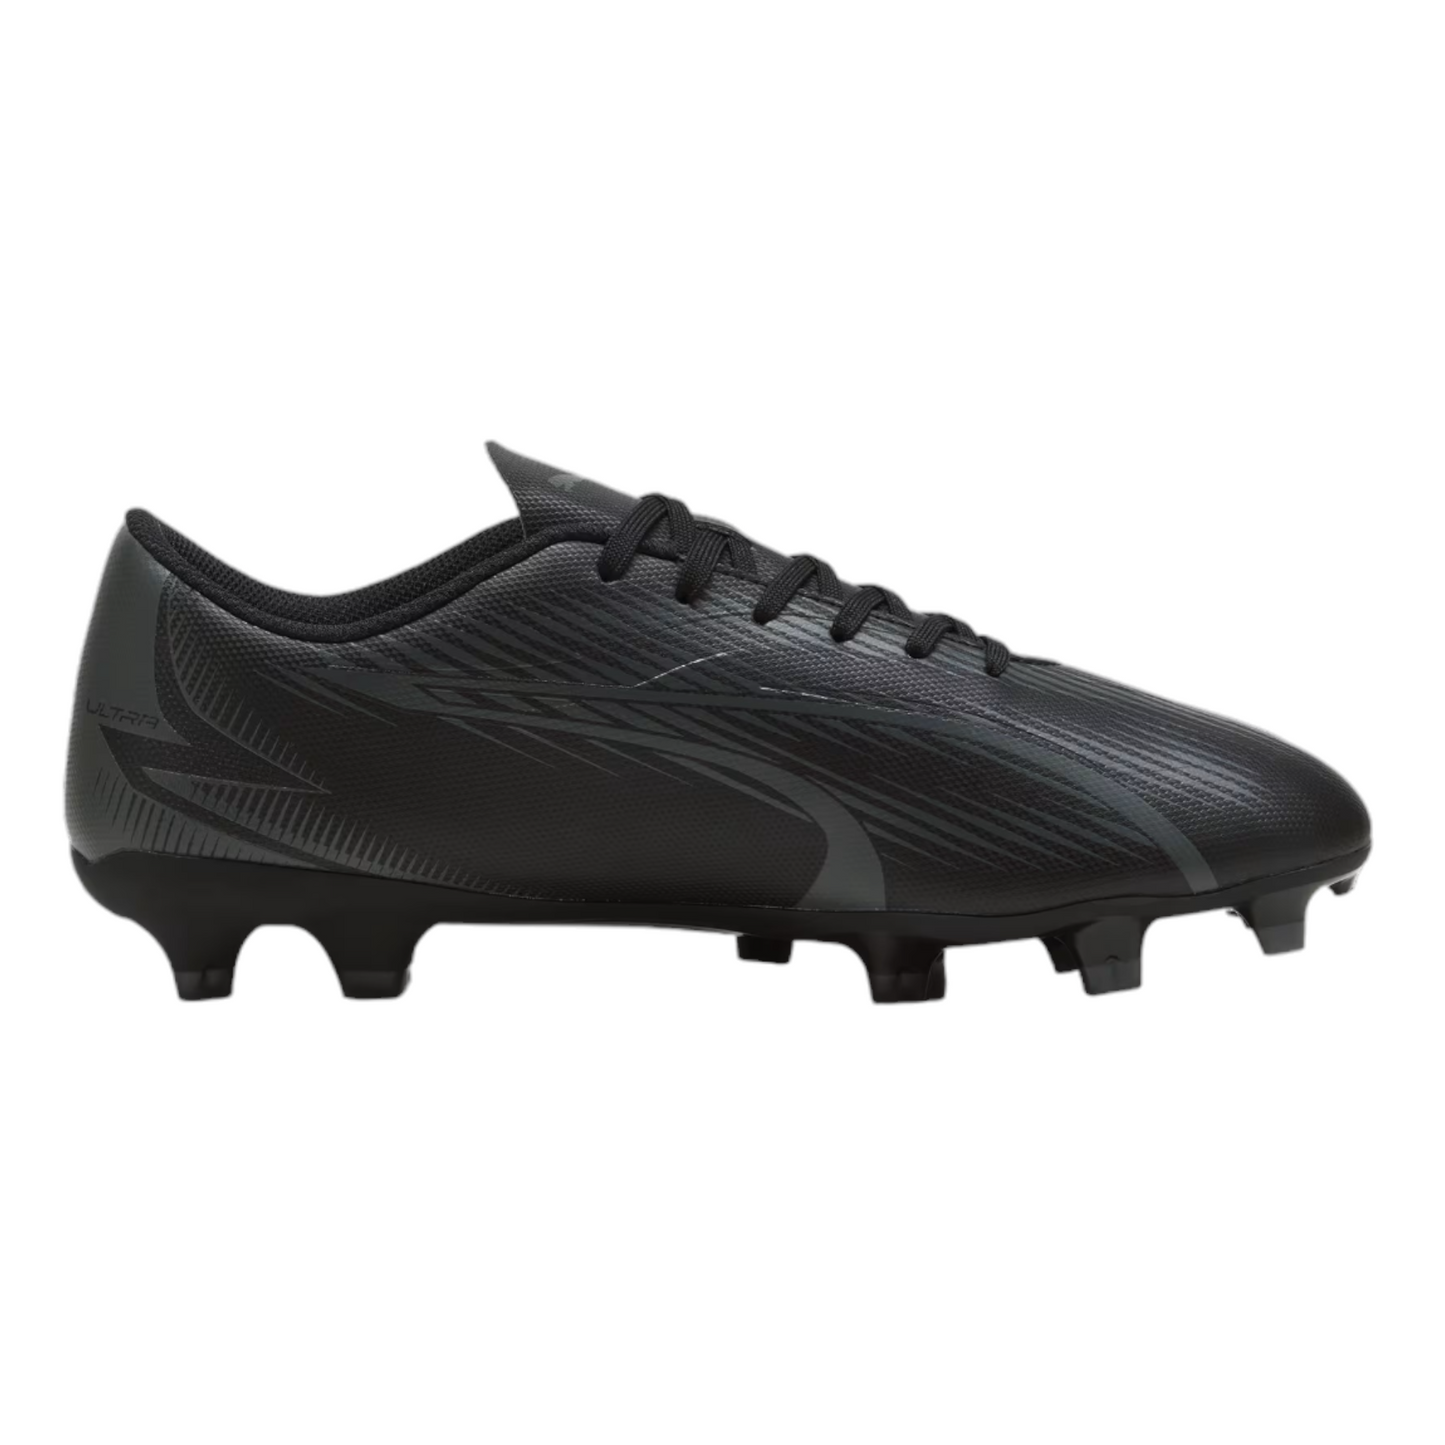 - Puma ULTRA PLAY FG/AG Men's Football Boots Black/Copper Rose - (107763 02) - ST6- R2L17